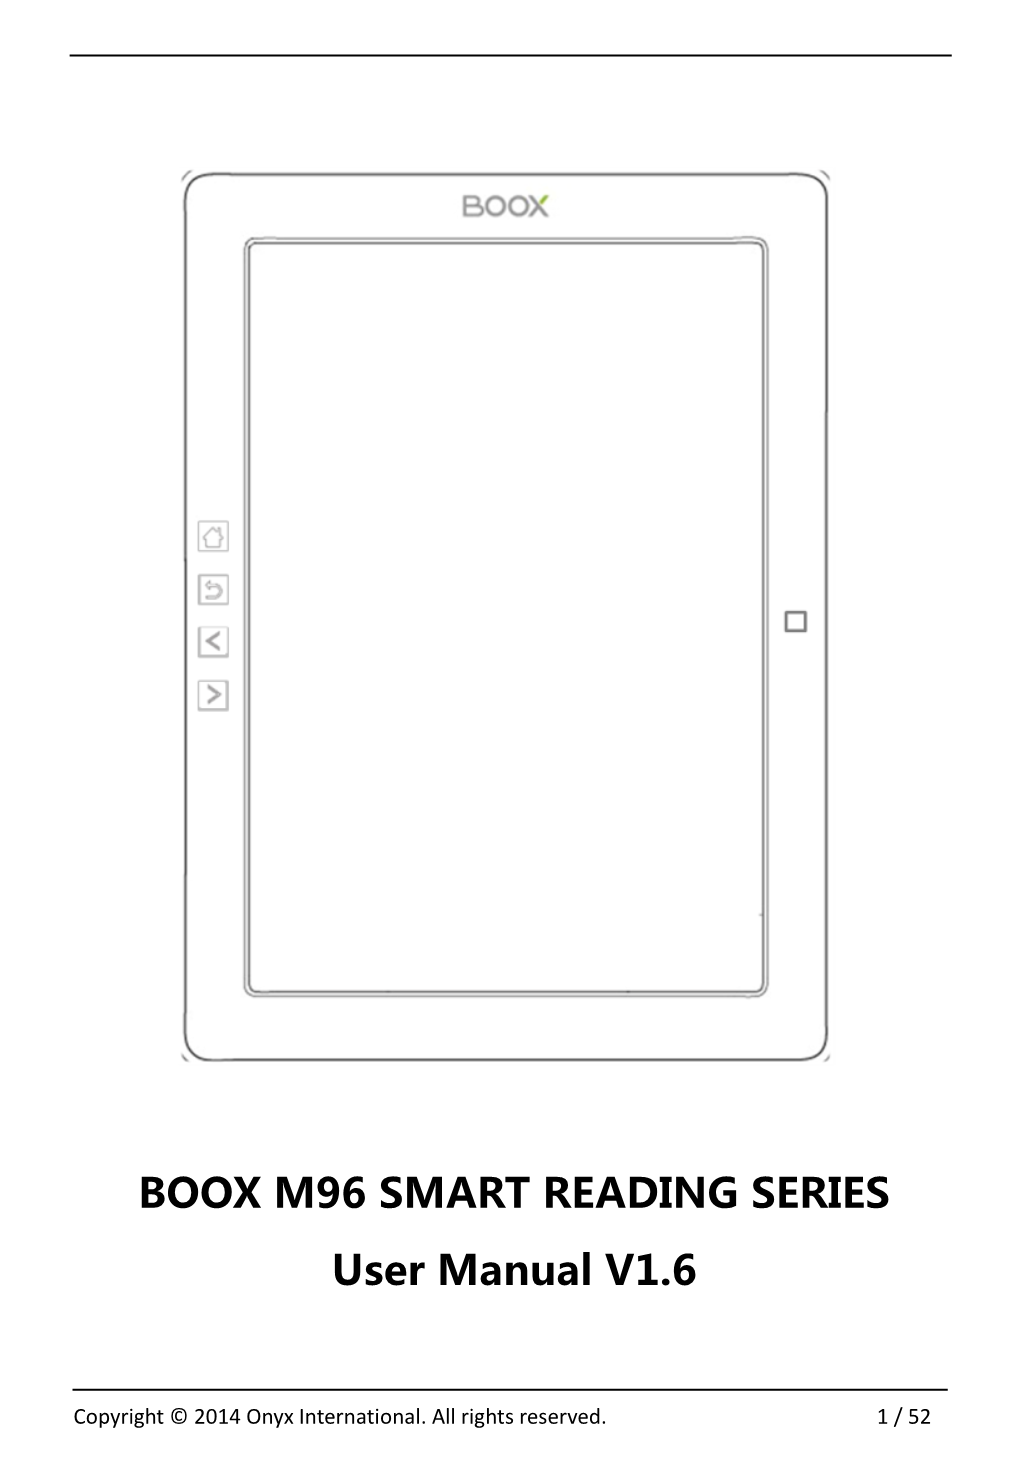 BOOX M96 SMART READING SERIES User Manual V1.6